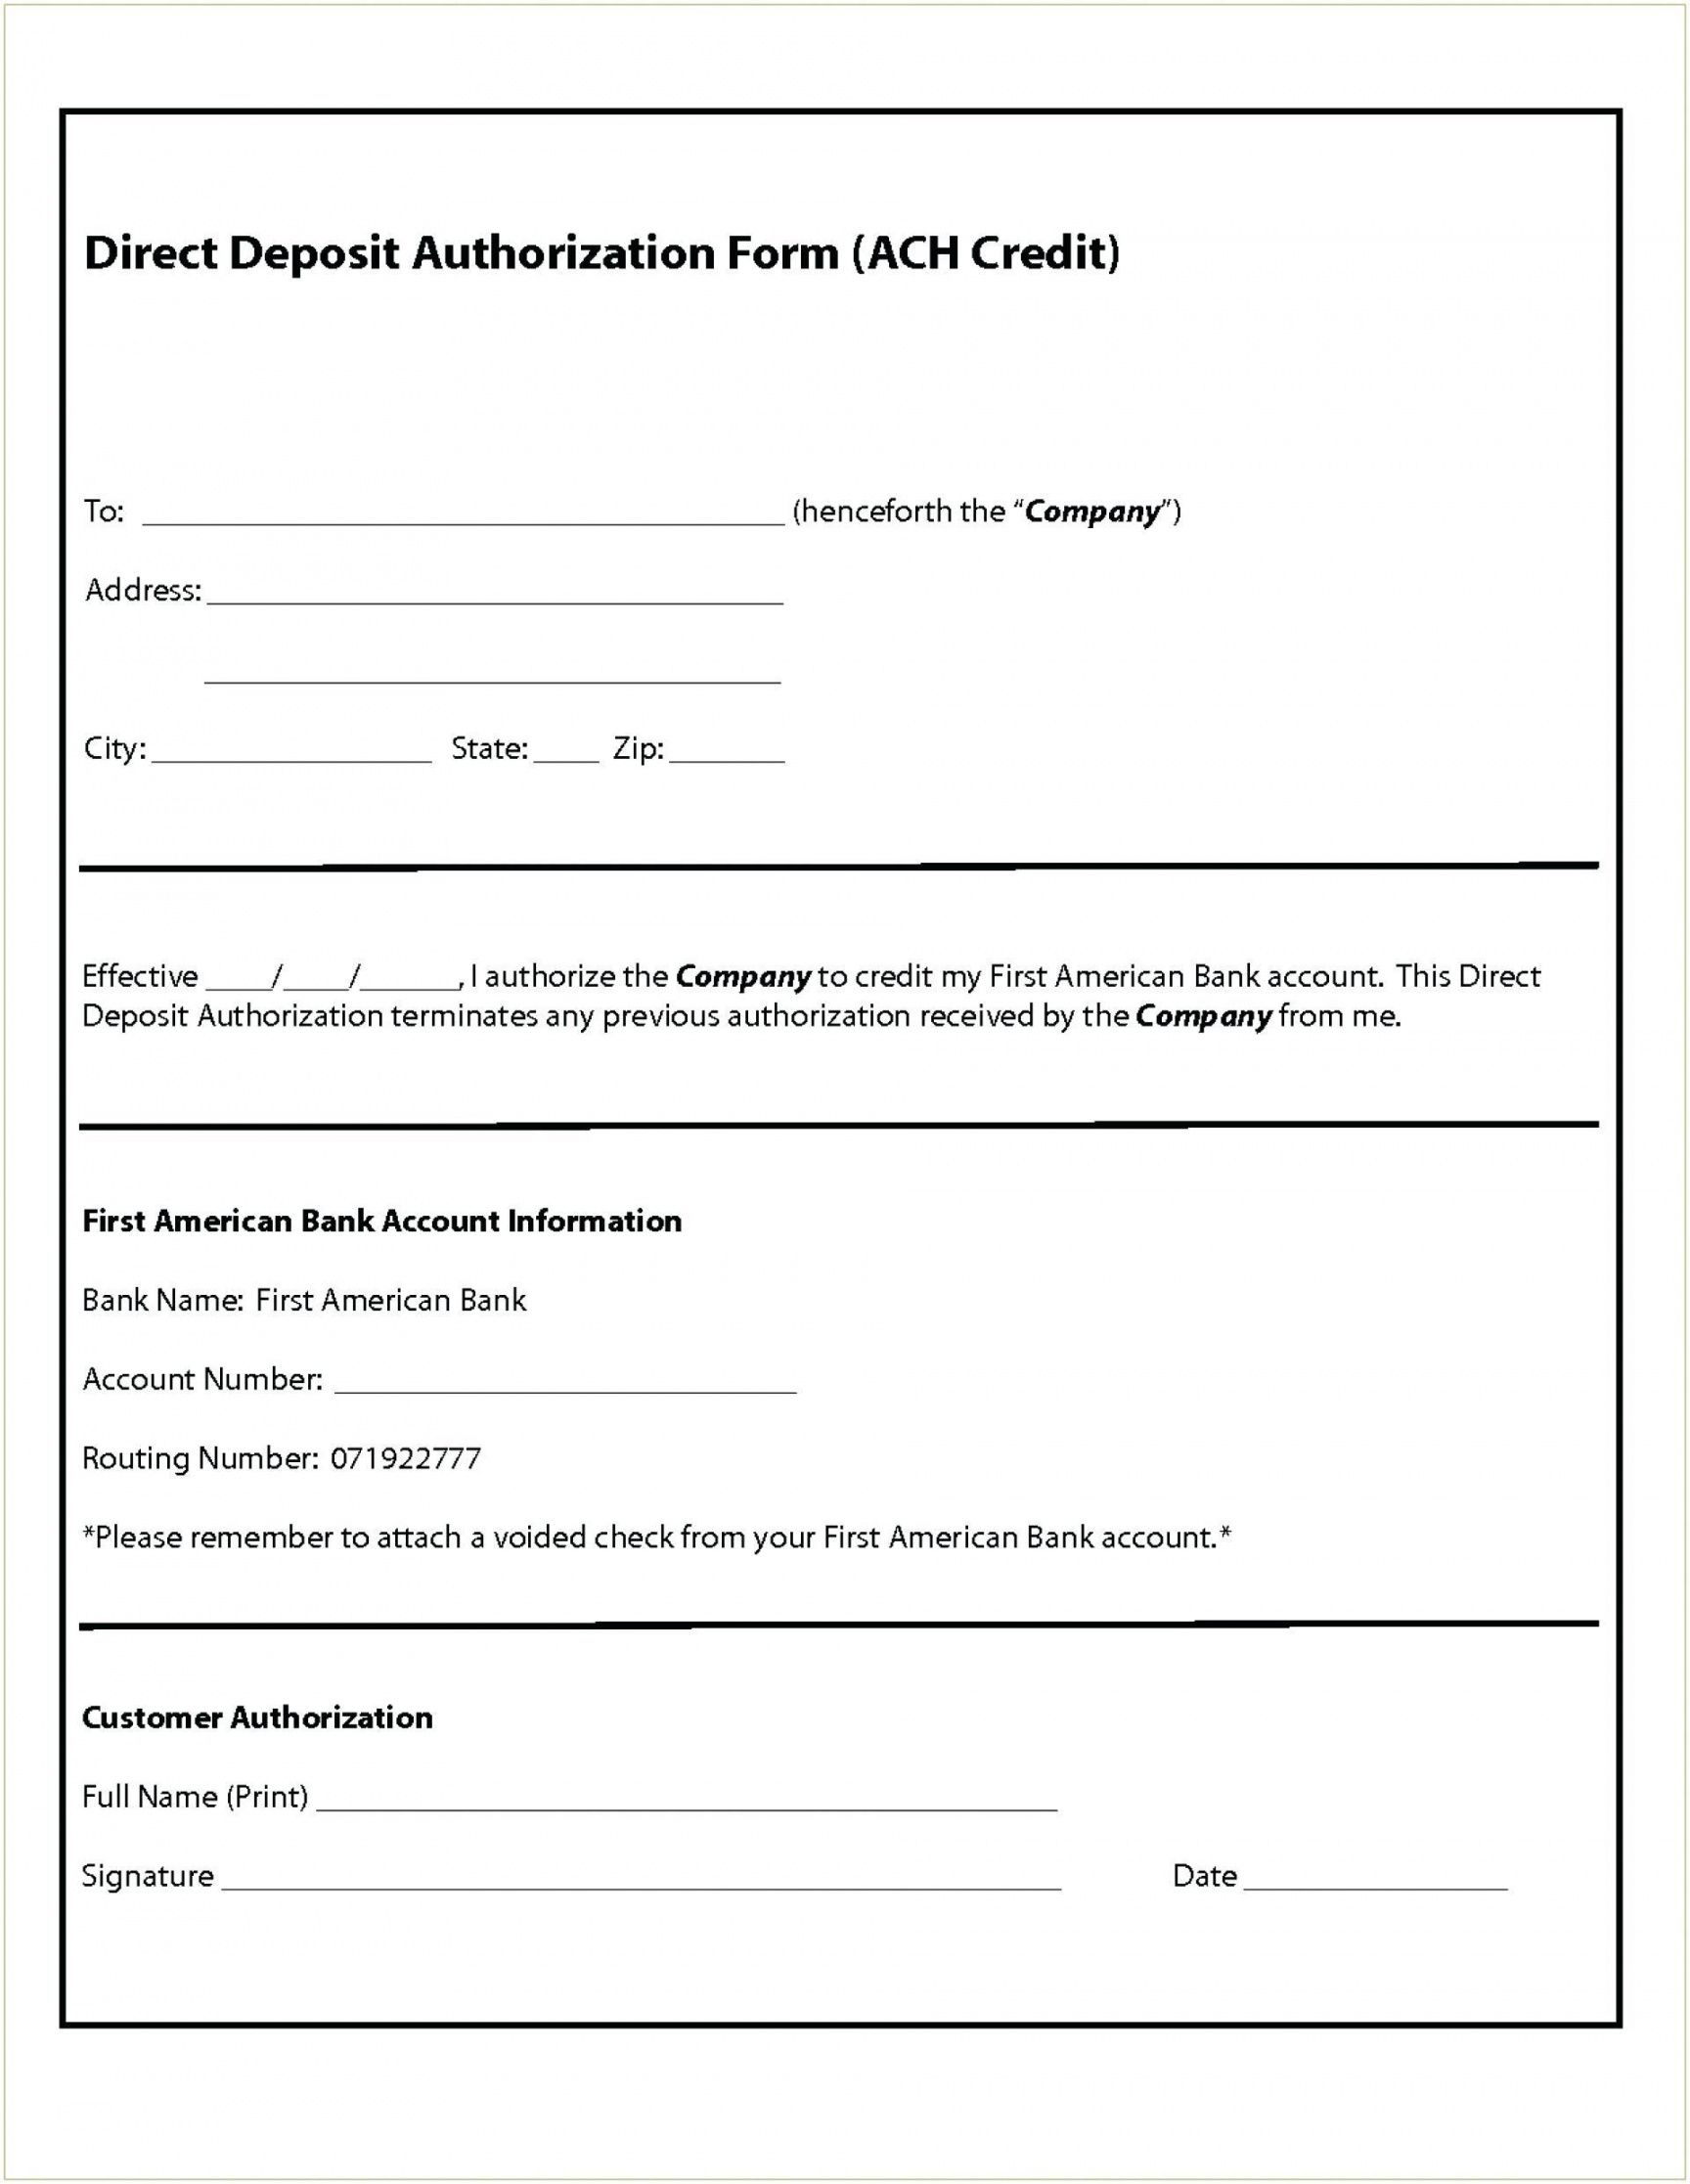 Generic Direct Deposit Authorization Form Submit Direct Deposit Form 